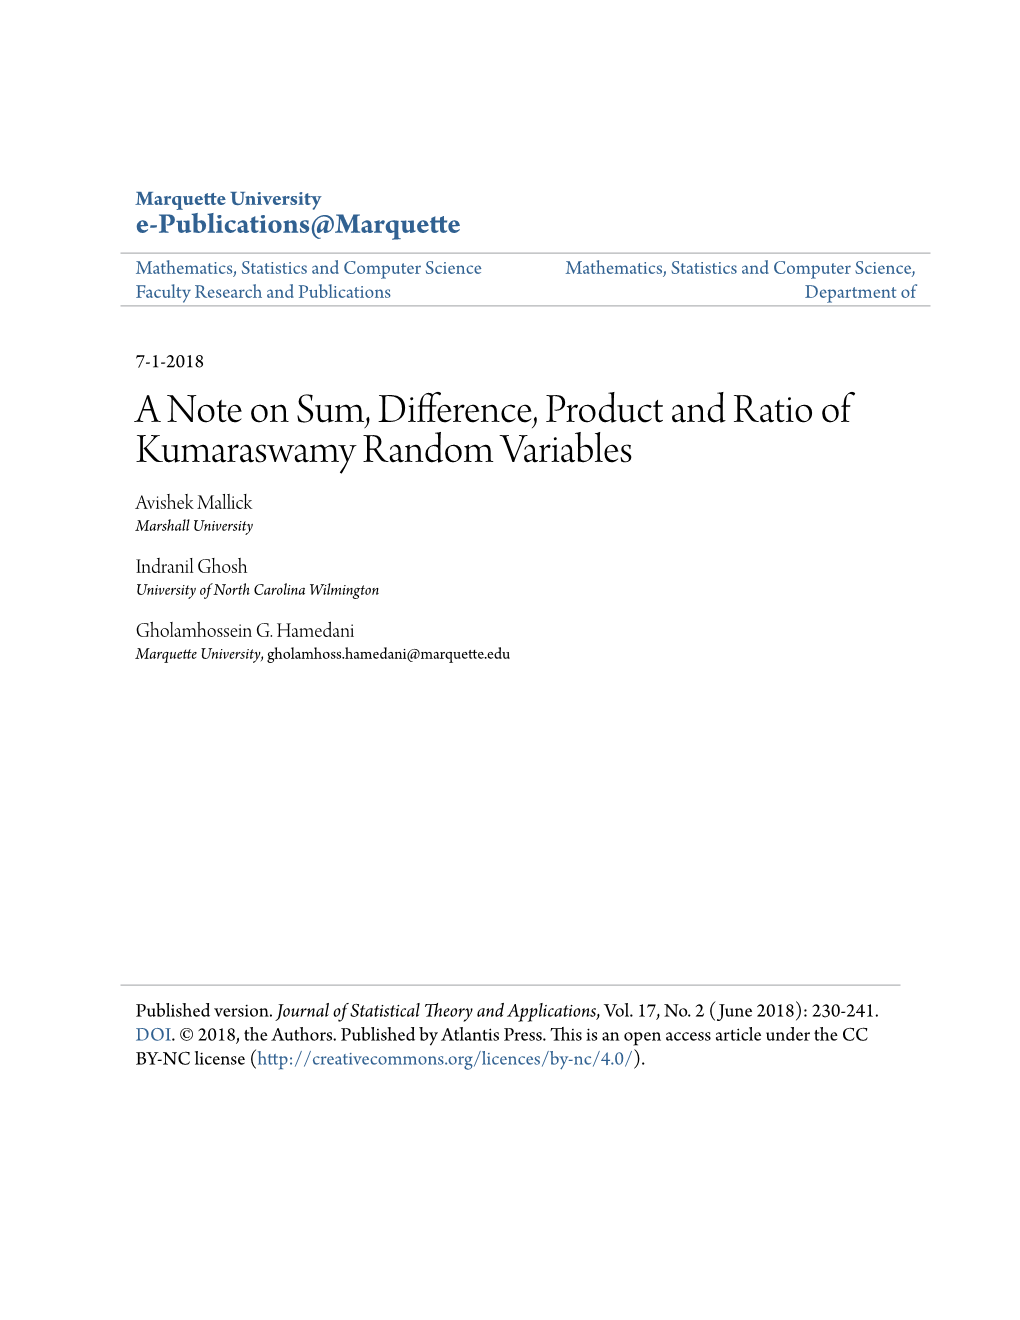 A Note on Sum, Difference, Product and Ratio of Kumaraswamy Random Variables Avishek Mallick Marshall University